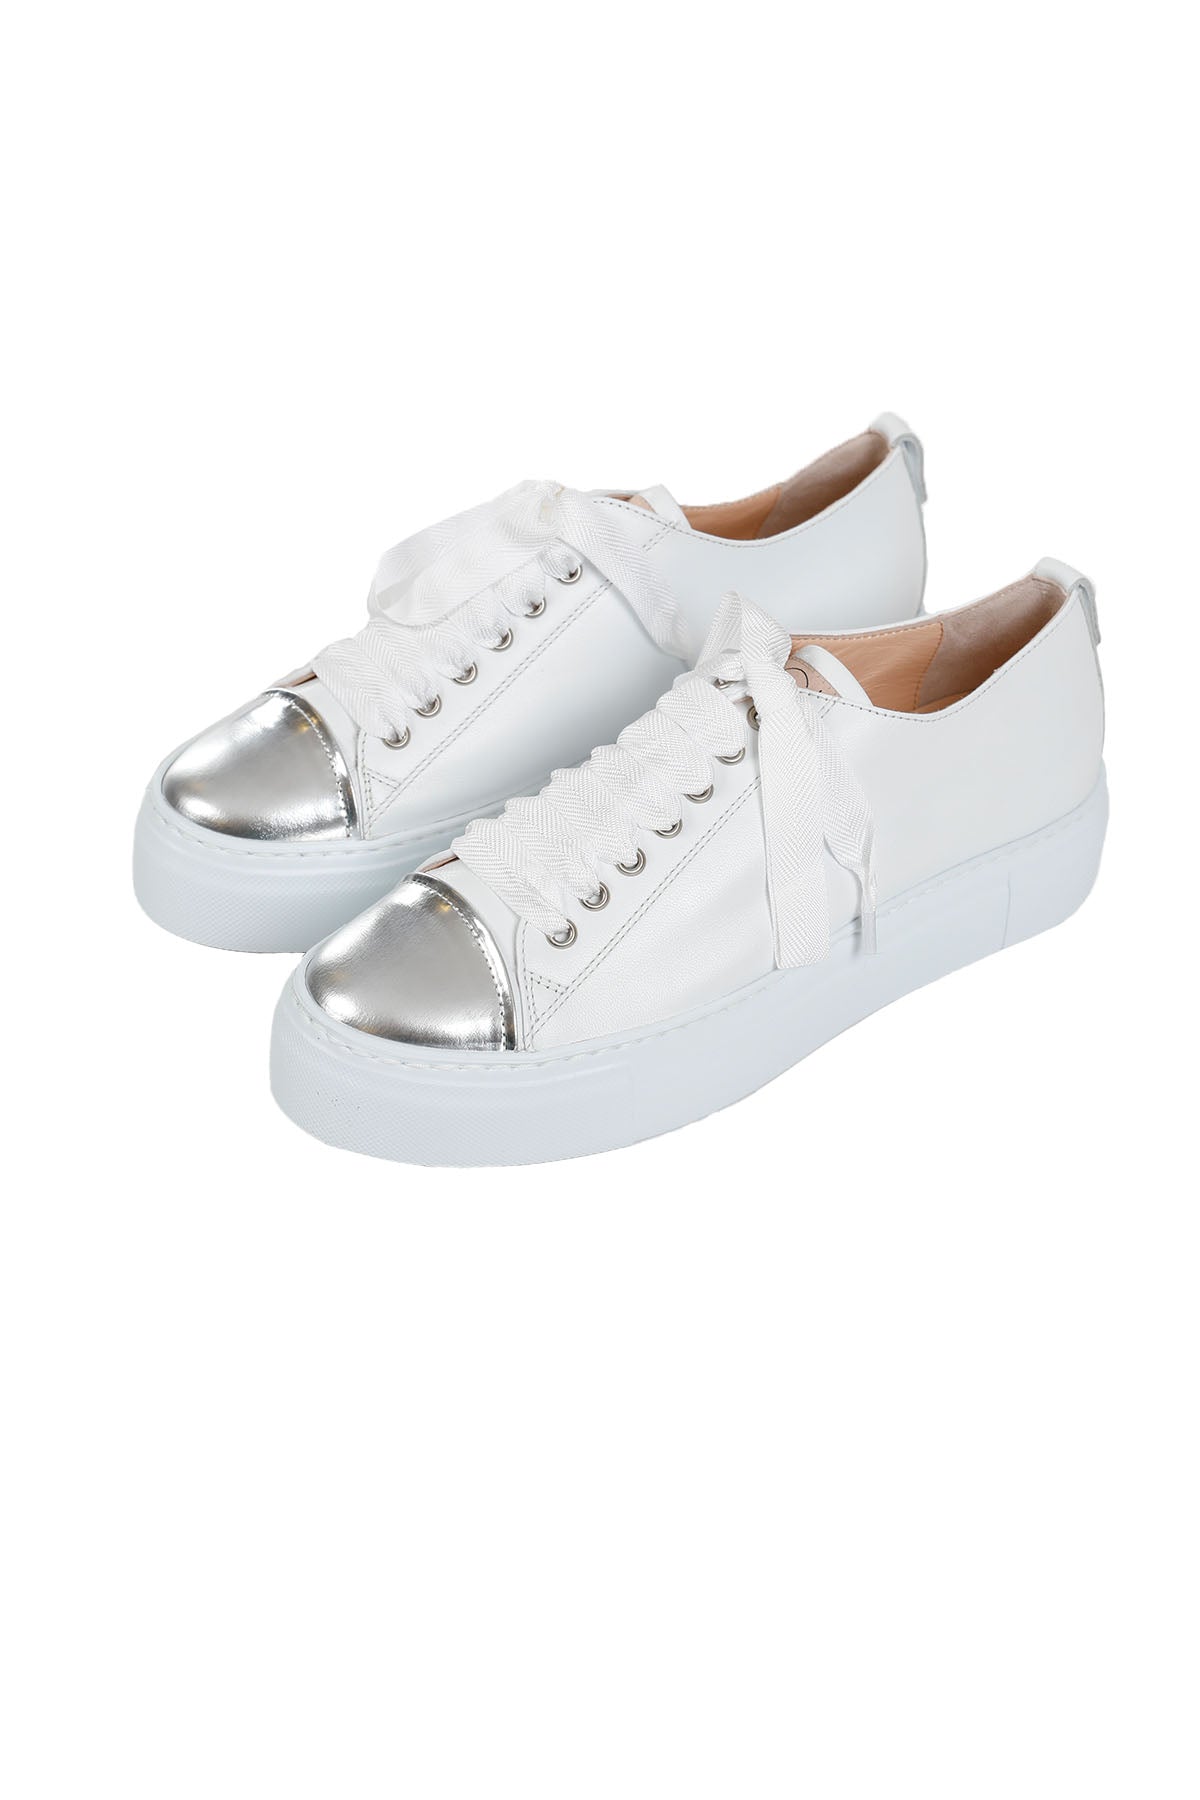 Agl Mollie Metalik Burunlu Sneaker Ayakkabı-Libas Trendy Fashion Store